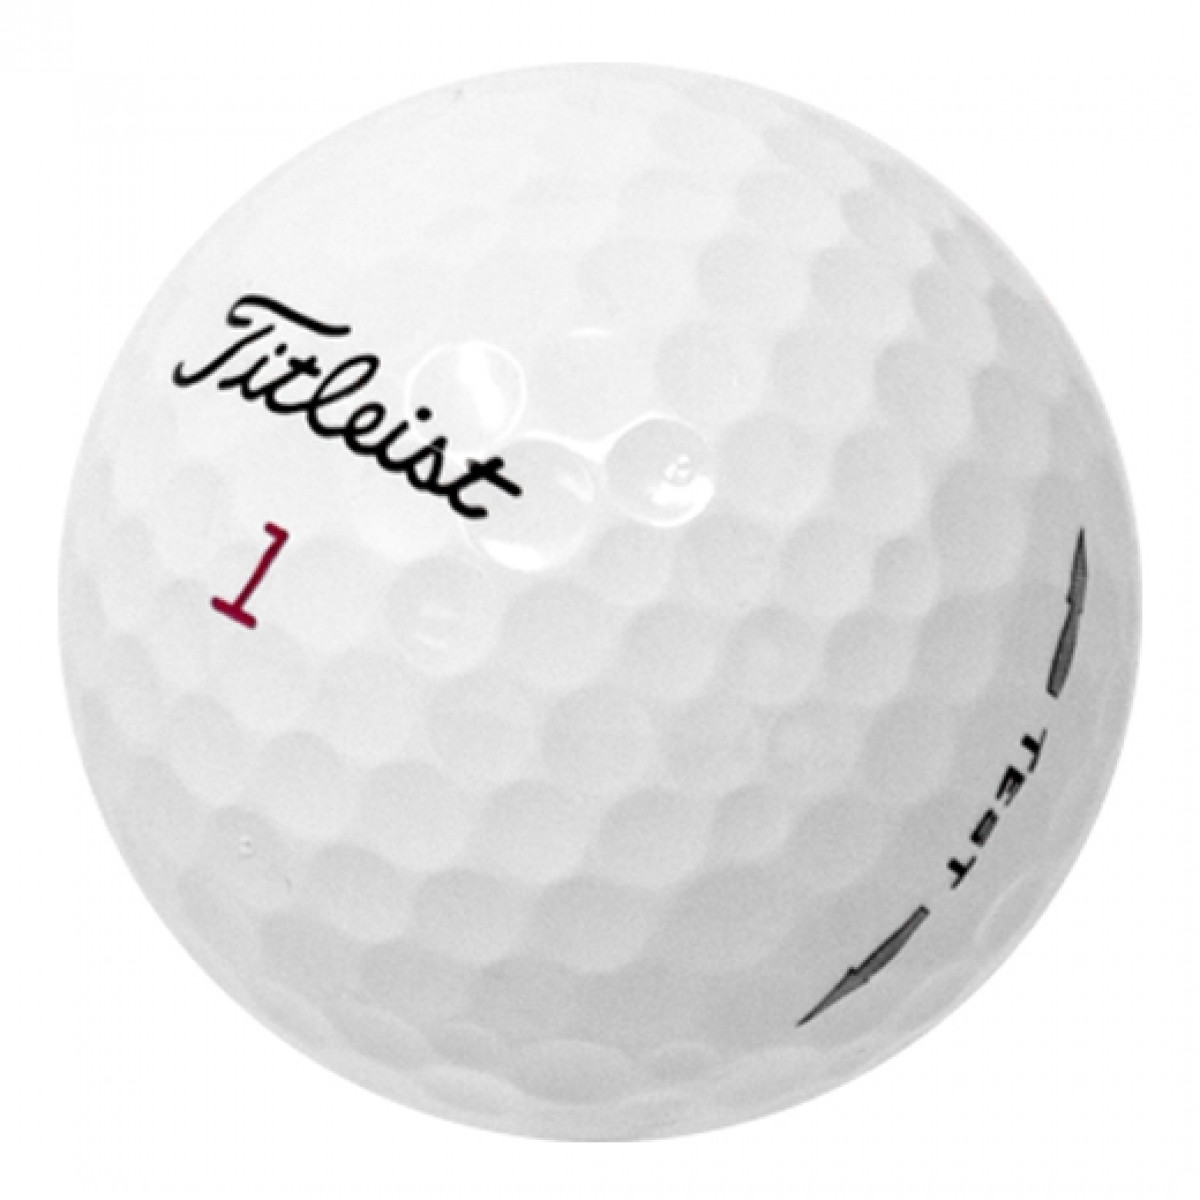 Titleist Pro V1x Test Golf Balls - 1 Dozen